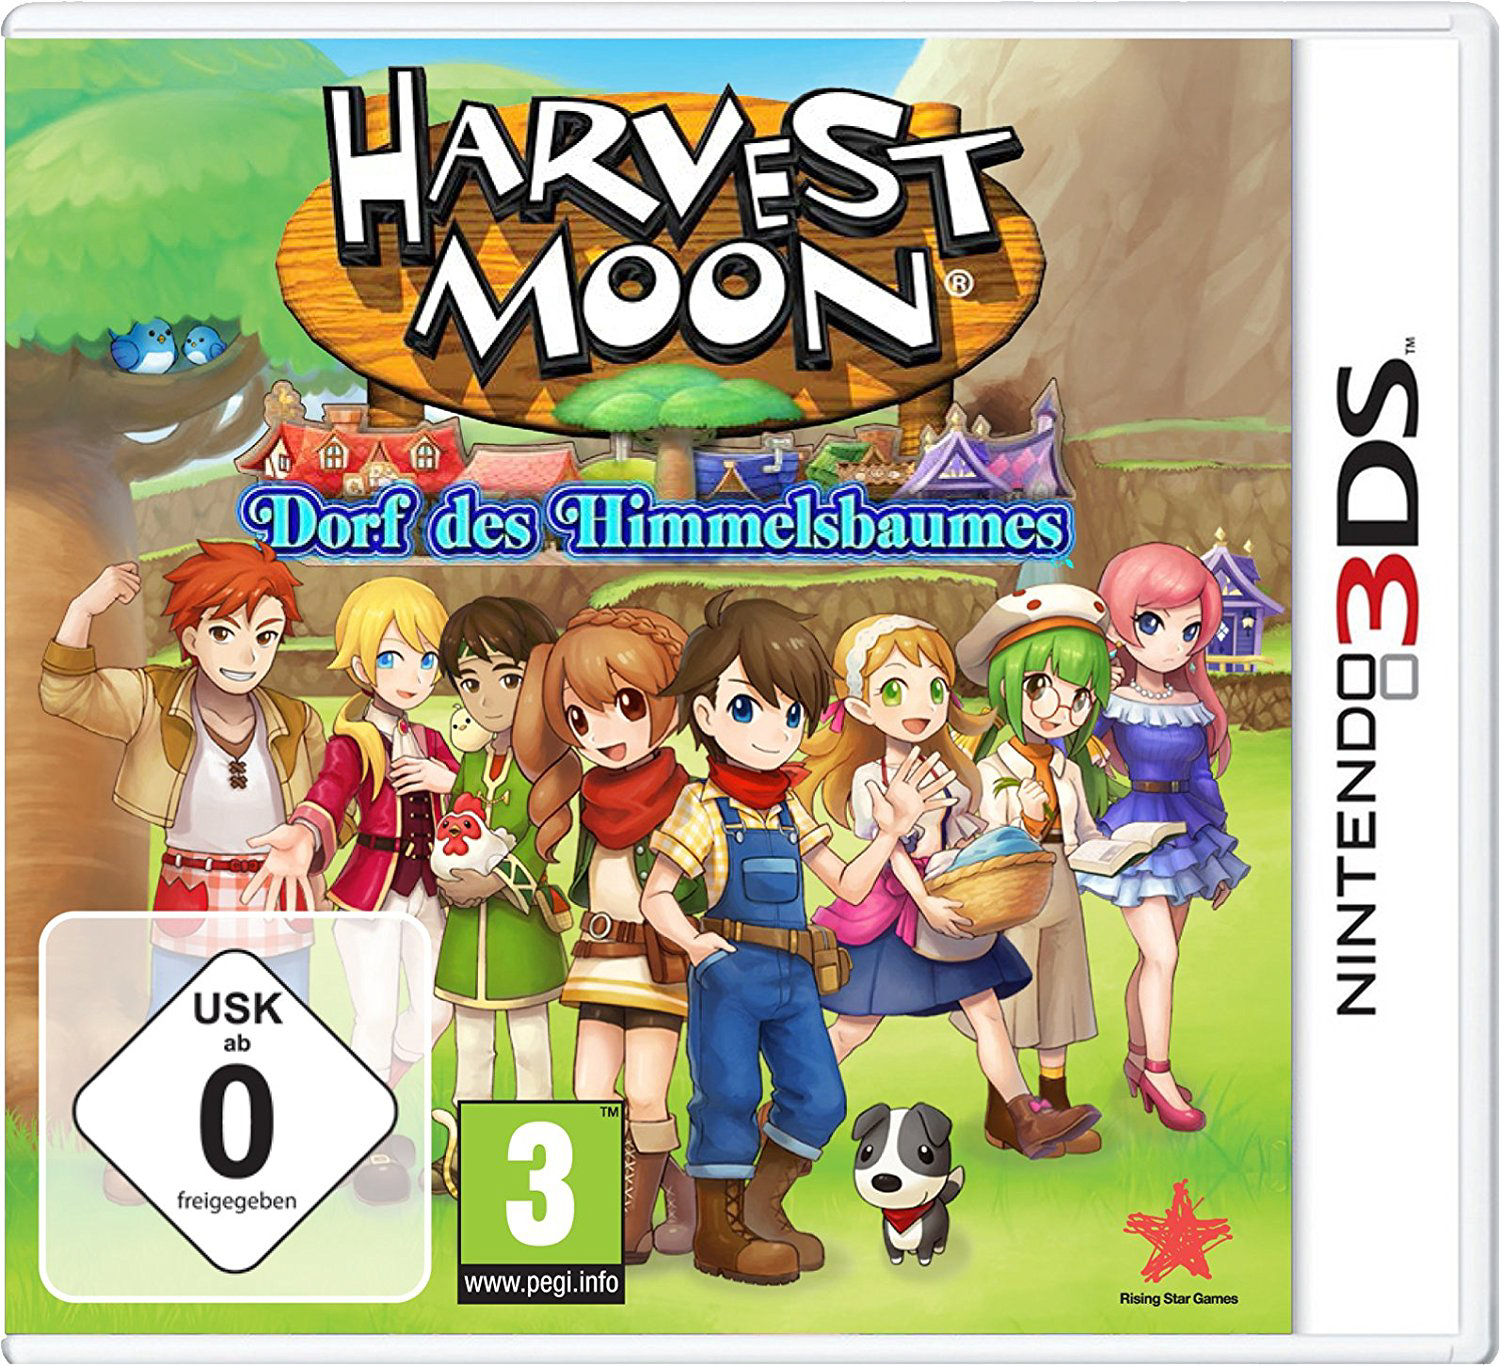 Harvest Moon: Dorf des Himmelbaumes